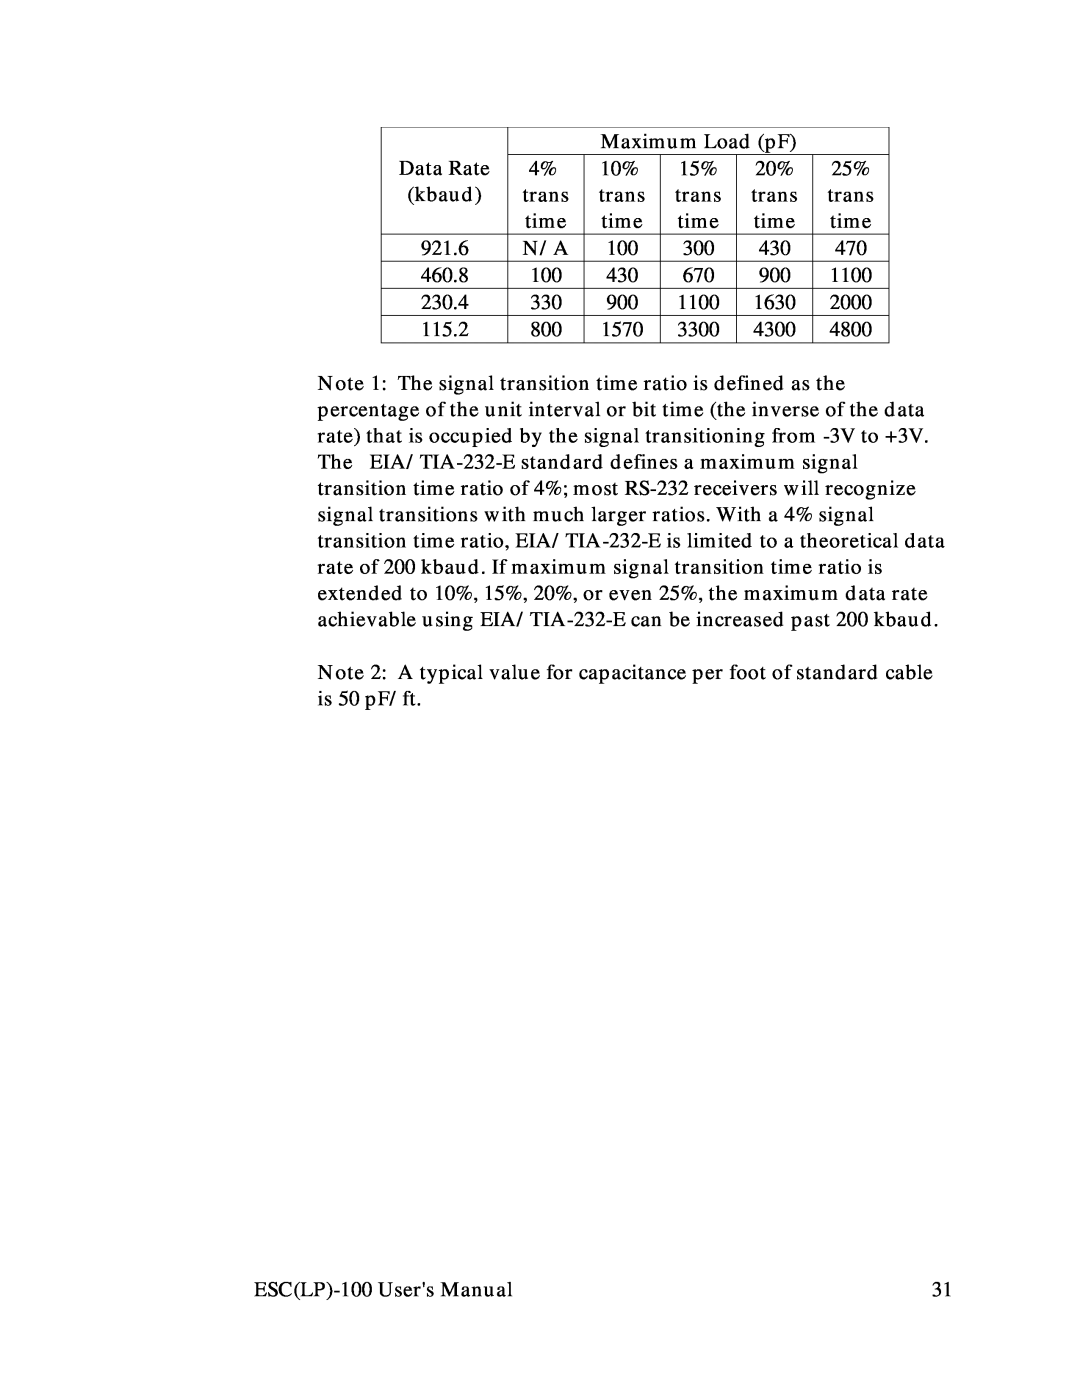 Quatech RS-232 Data Rate, Maximum Load pF, kbaud, trans, time, 921.6, 460.8, 1100, 230.4, 1630, 2000, 115.2, 1570, 3300 